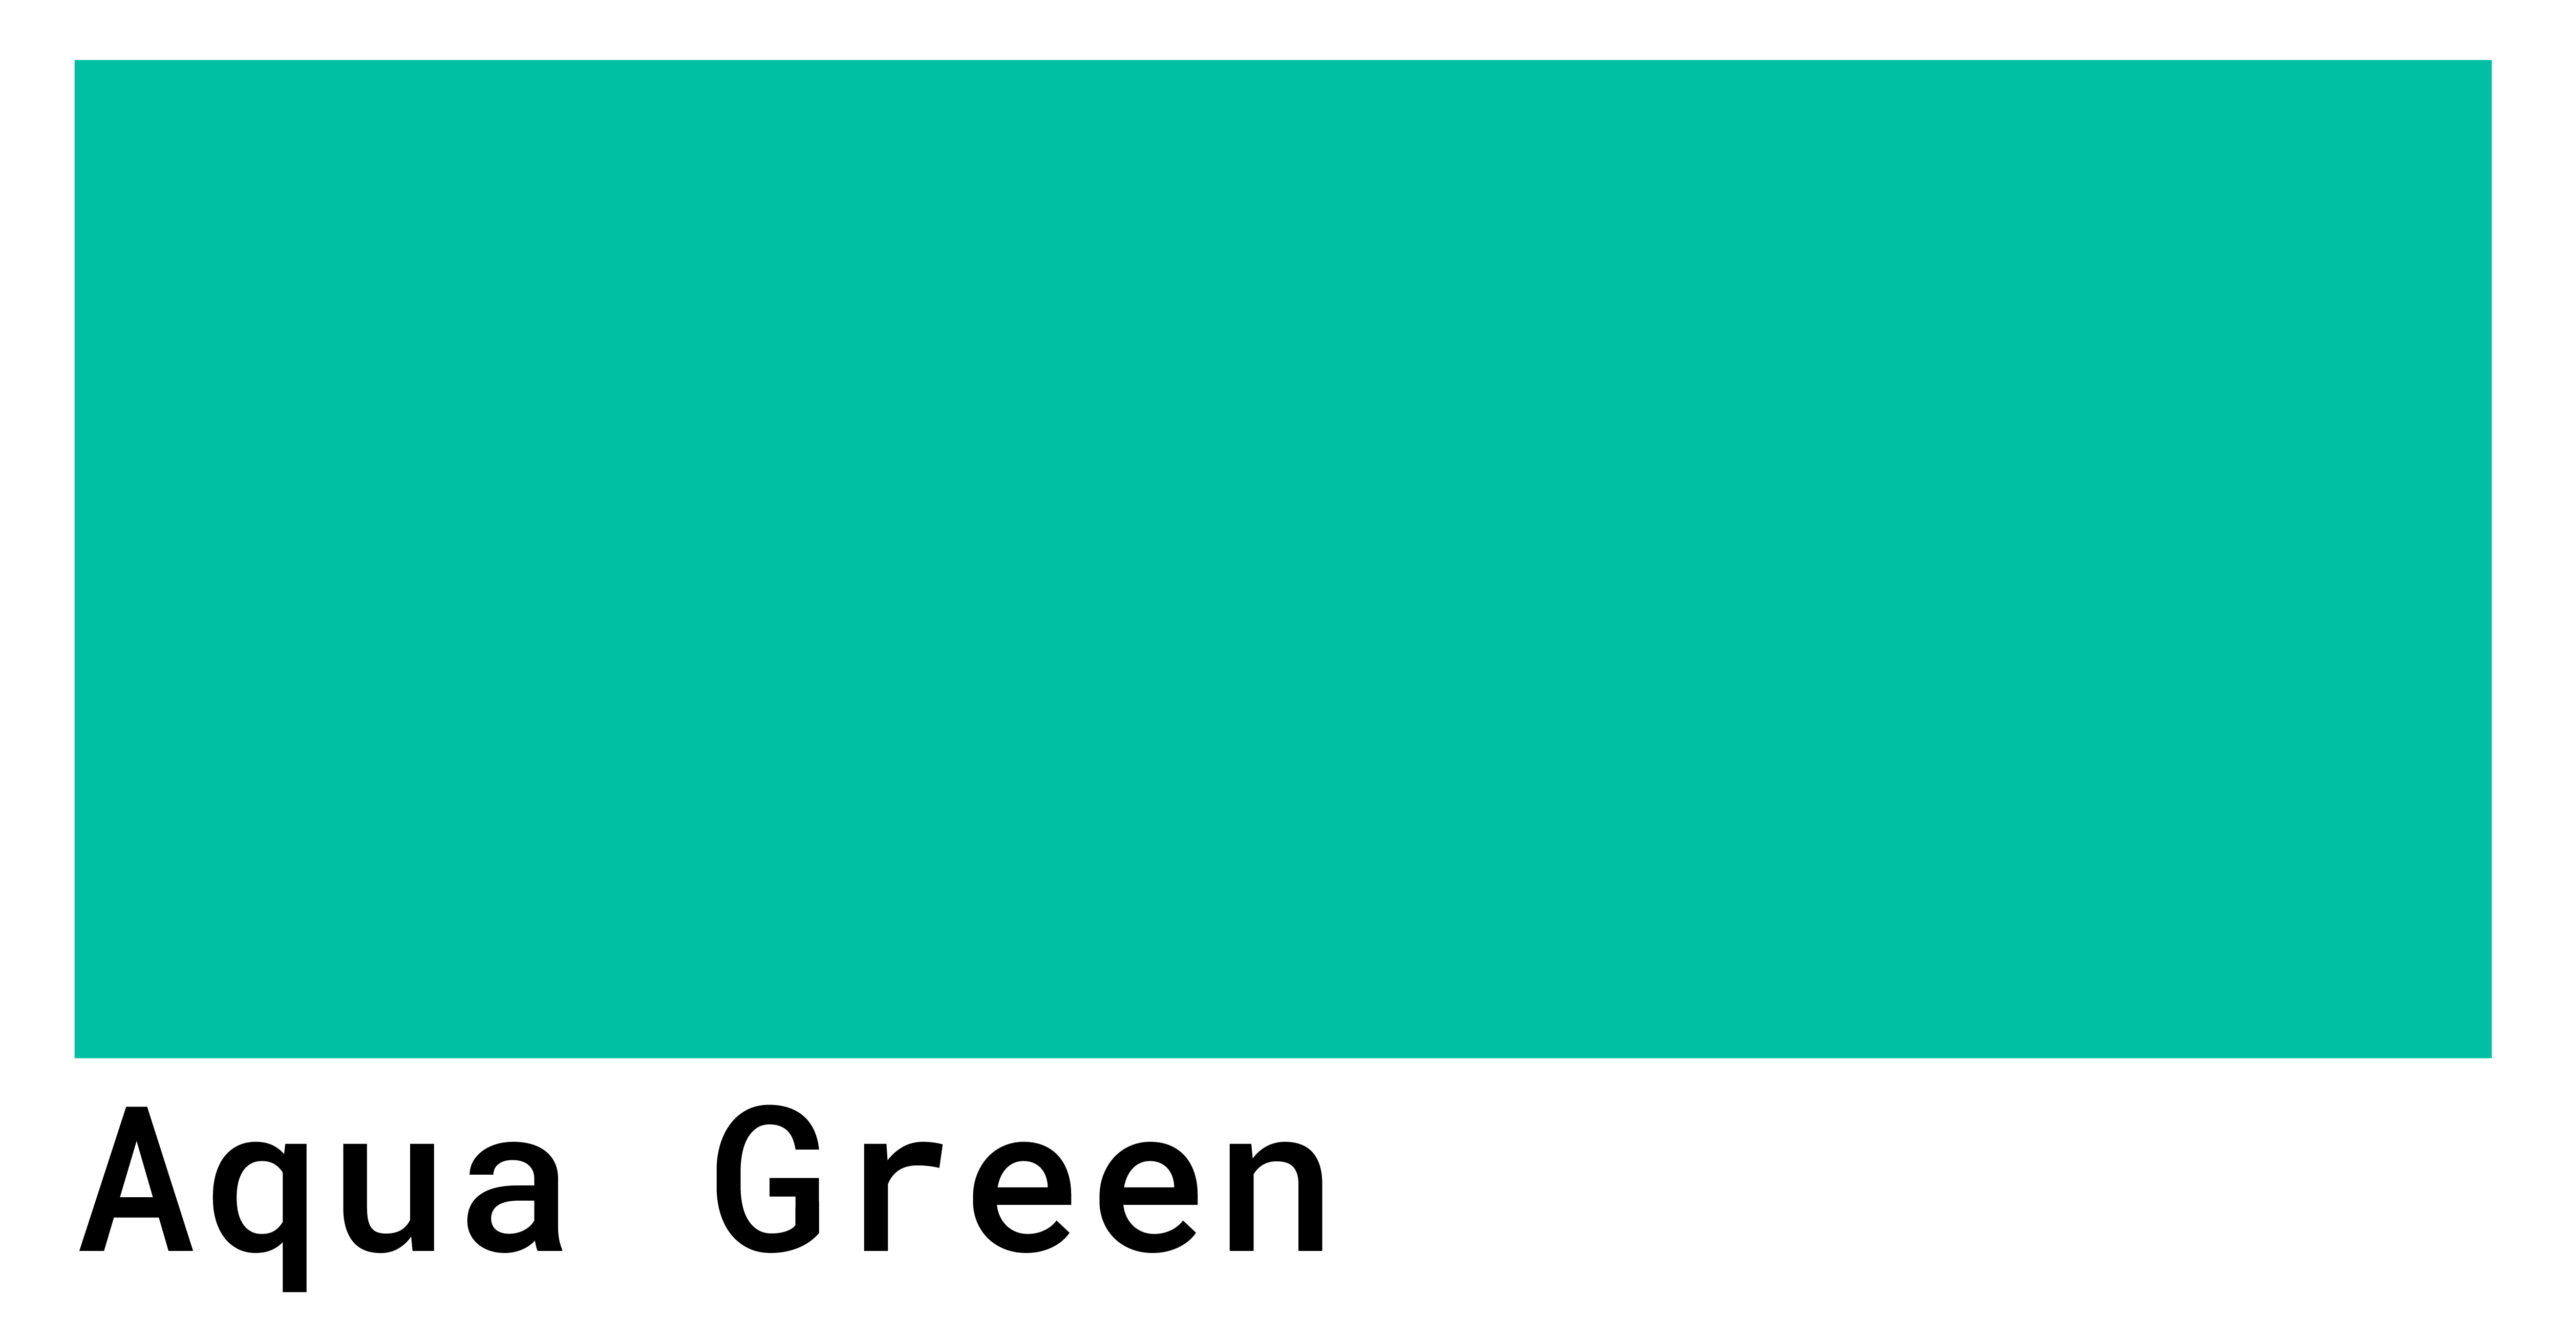 Aqua Green Color Codes The Hex, RGB and CMYK Values That